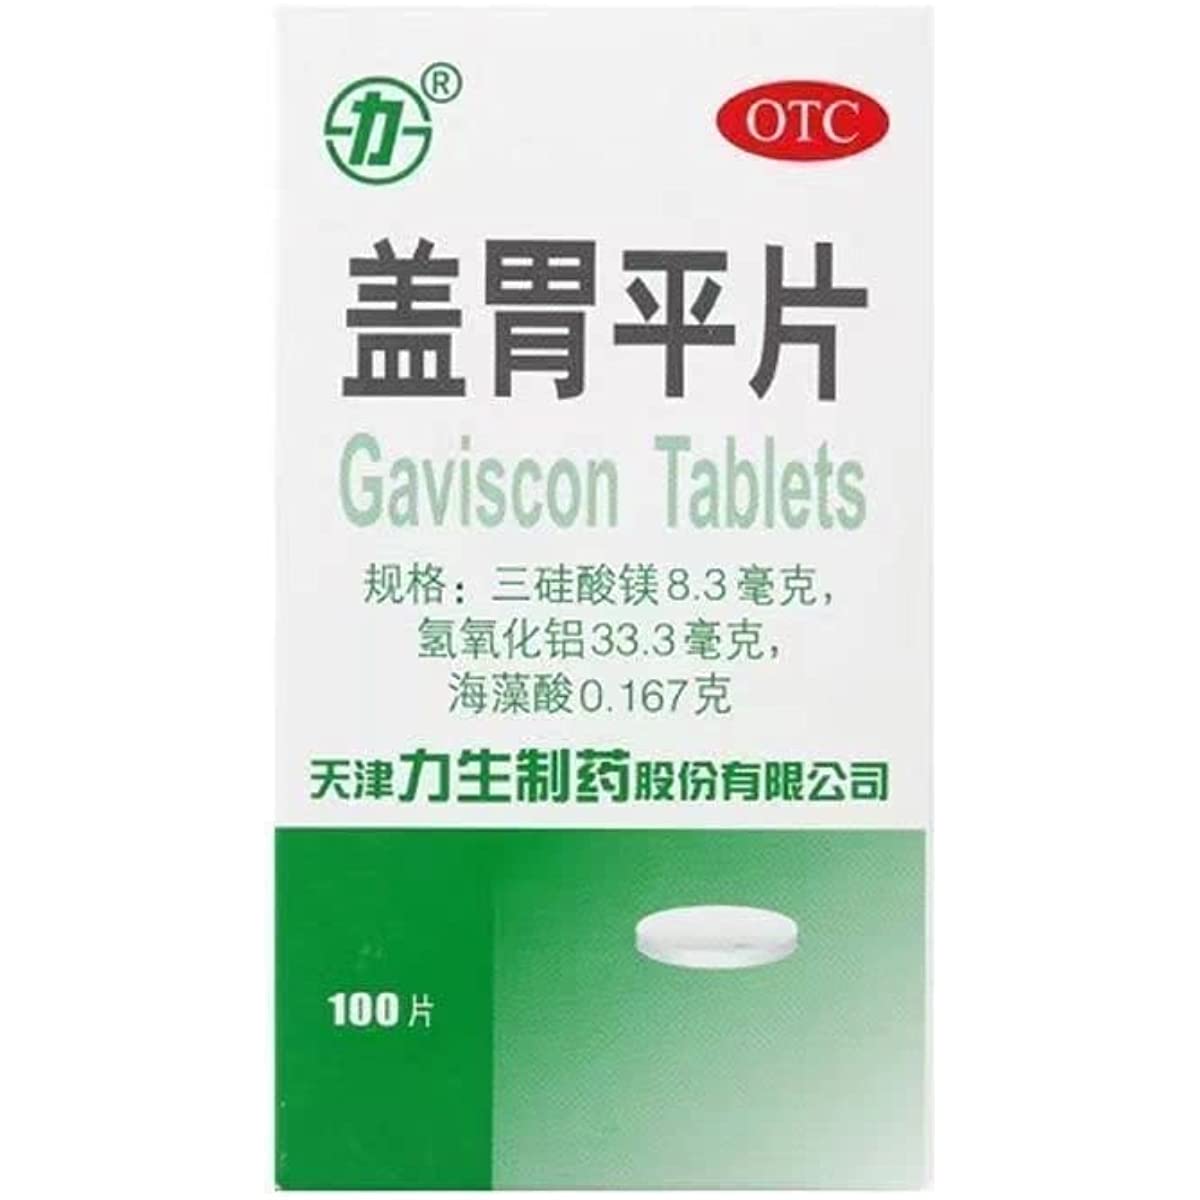 2 Boxes, Gaiweiping Pian 100 Tablets / Box 盖胃平片